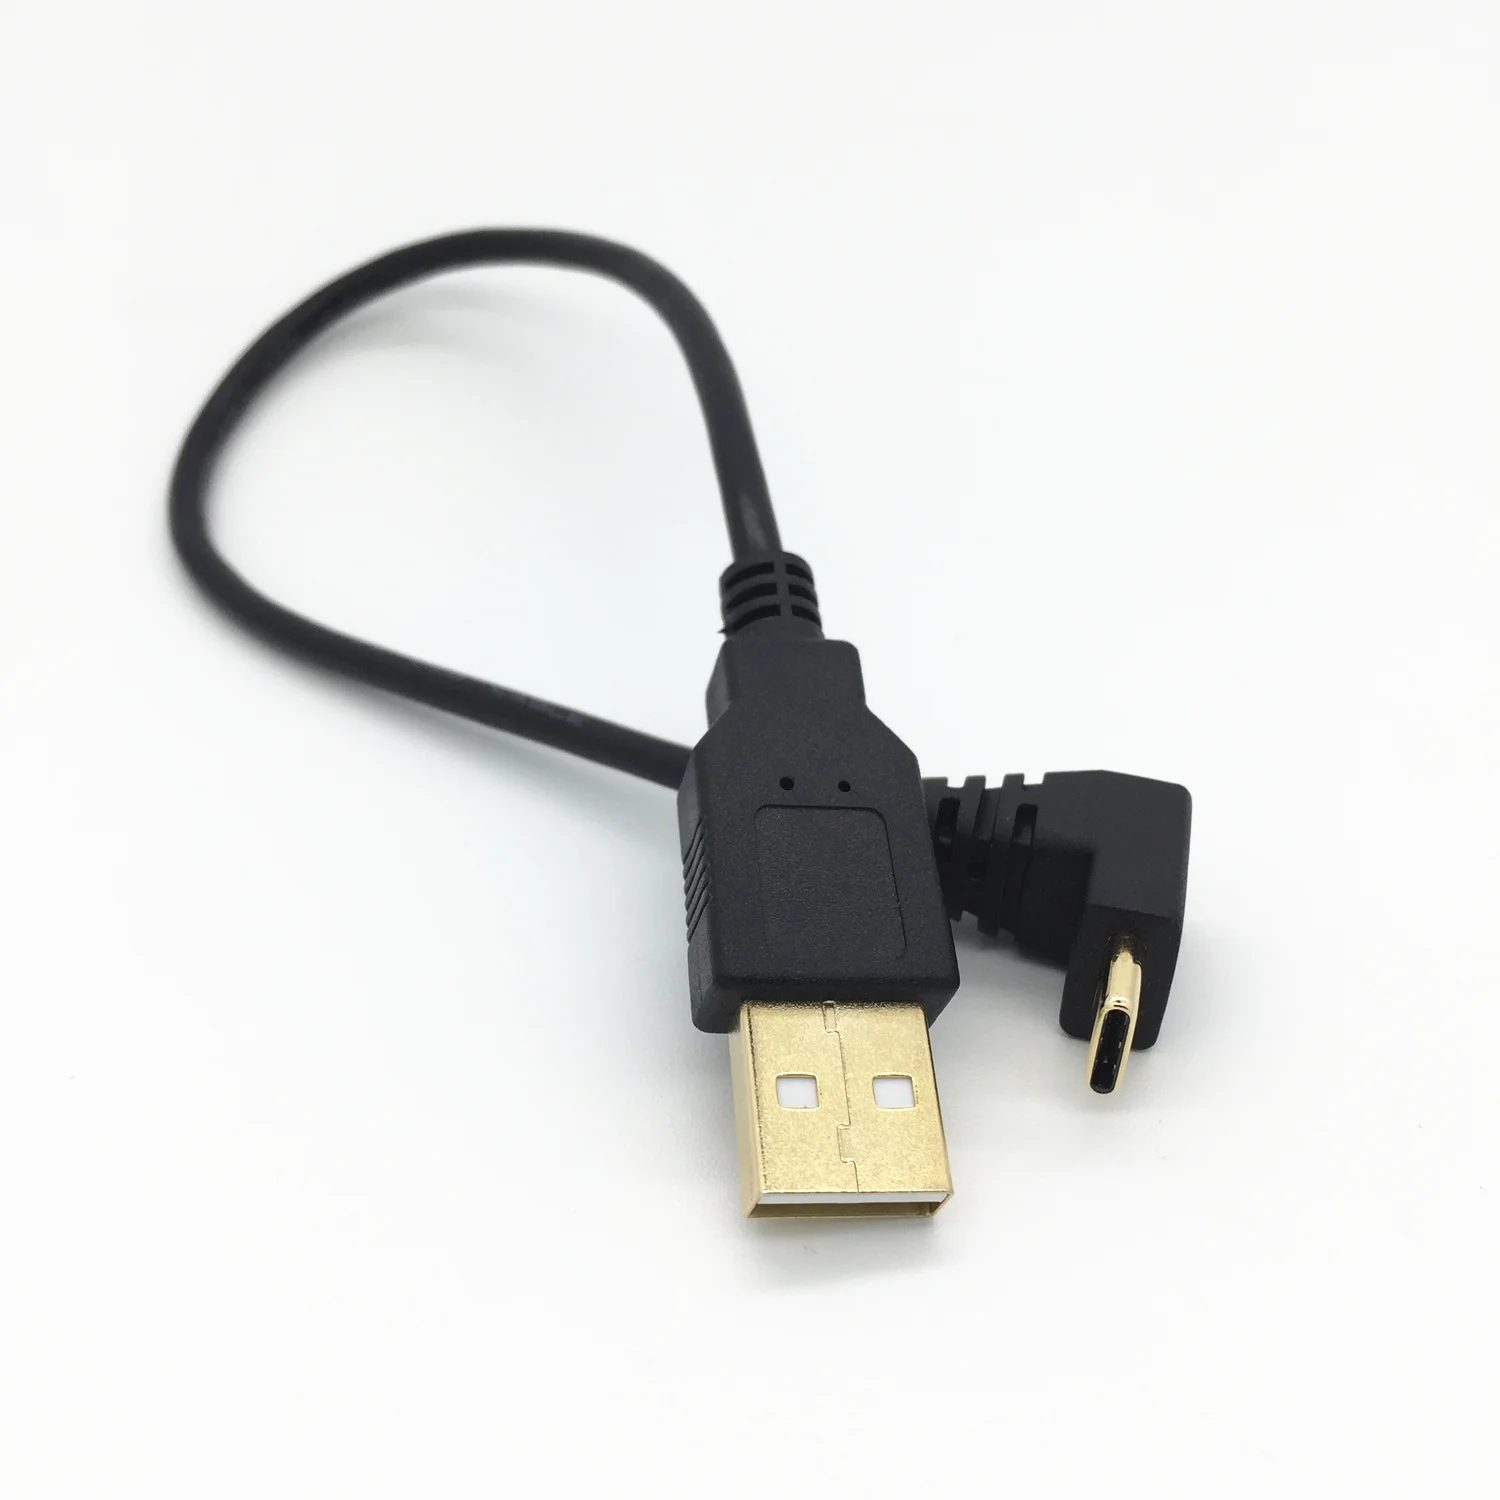  USB 2.0 A Male To 90 Degree Angle TypeC Type-c Cable for Xiaomi Mi6 6x MI5 5S 5S PLUS 5x 5c 4S 4C,REDMI PRO